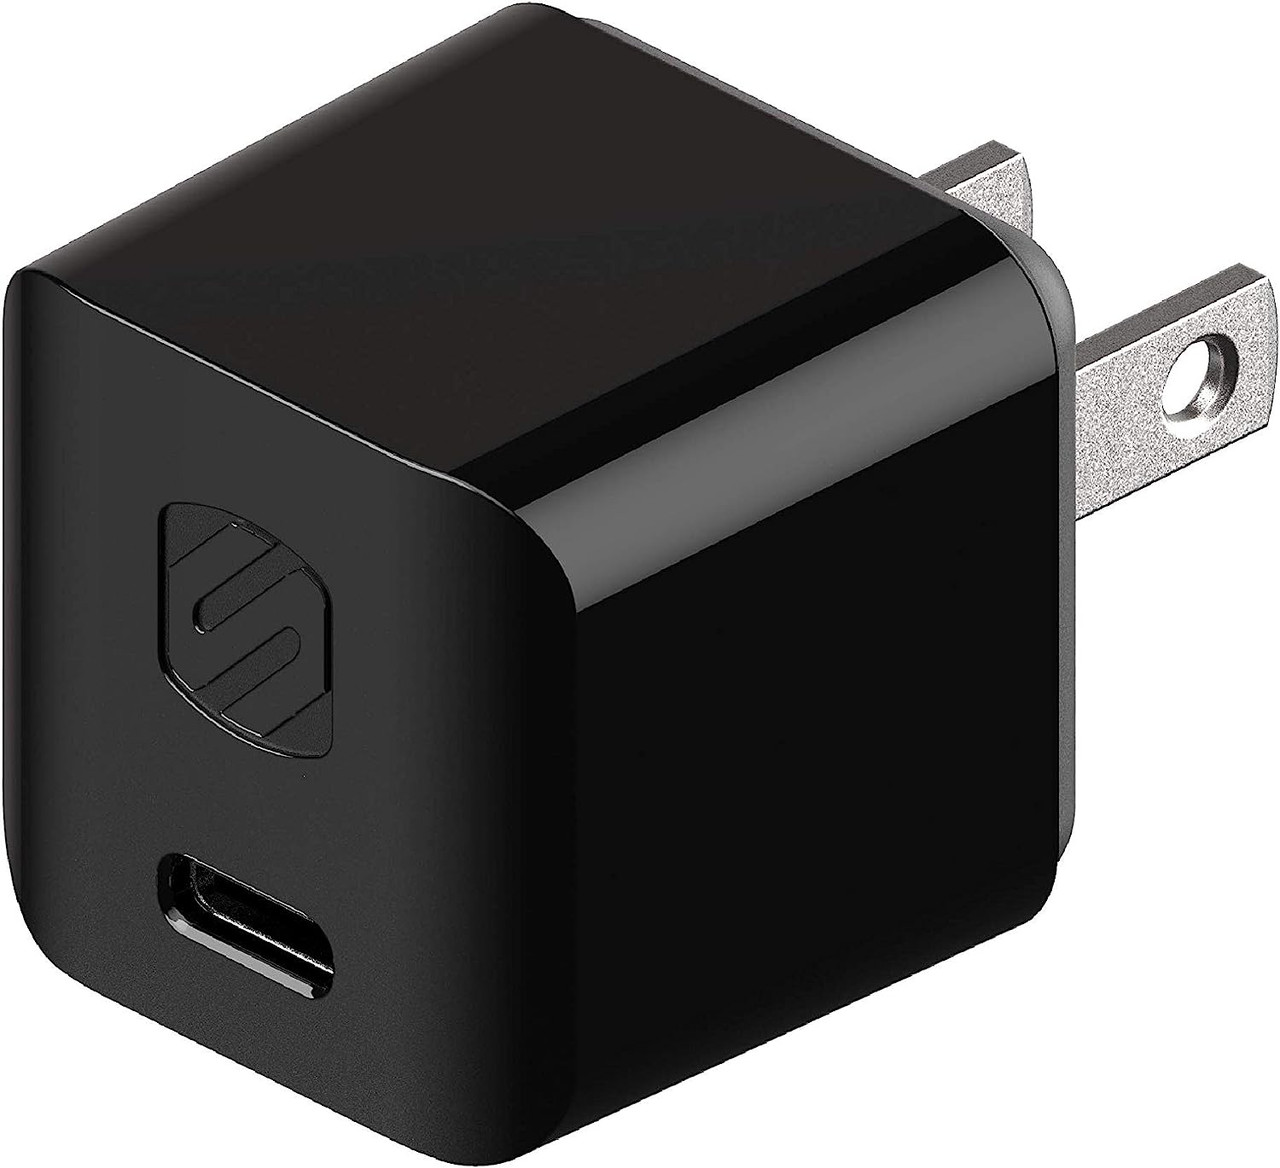 Mini Chargeur rapide HAMA USB-C 20W